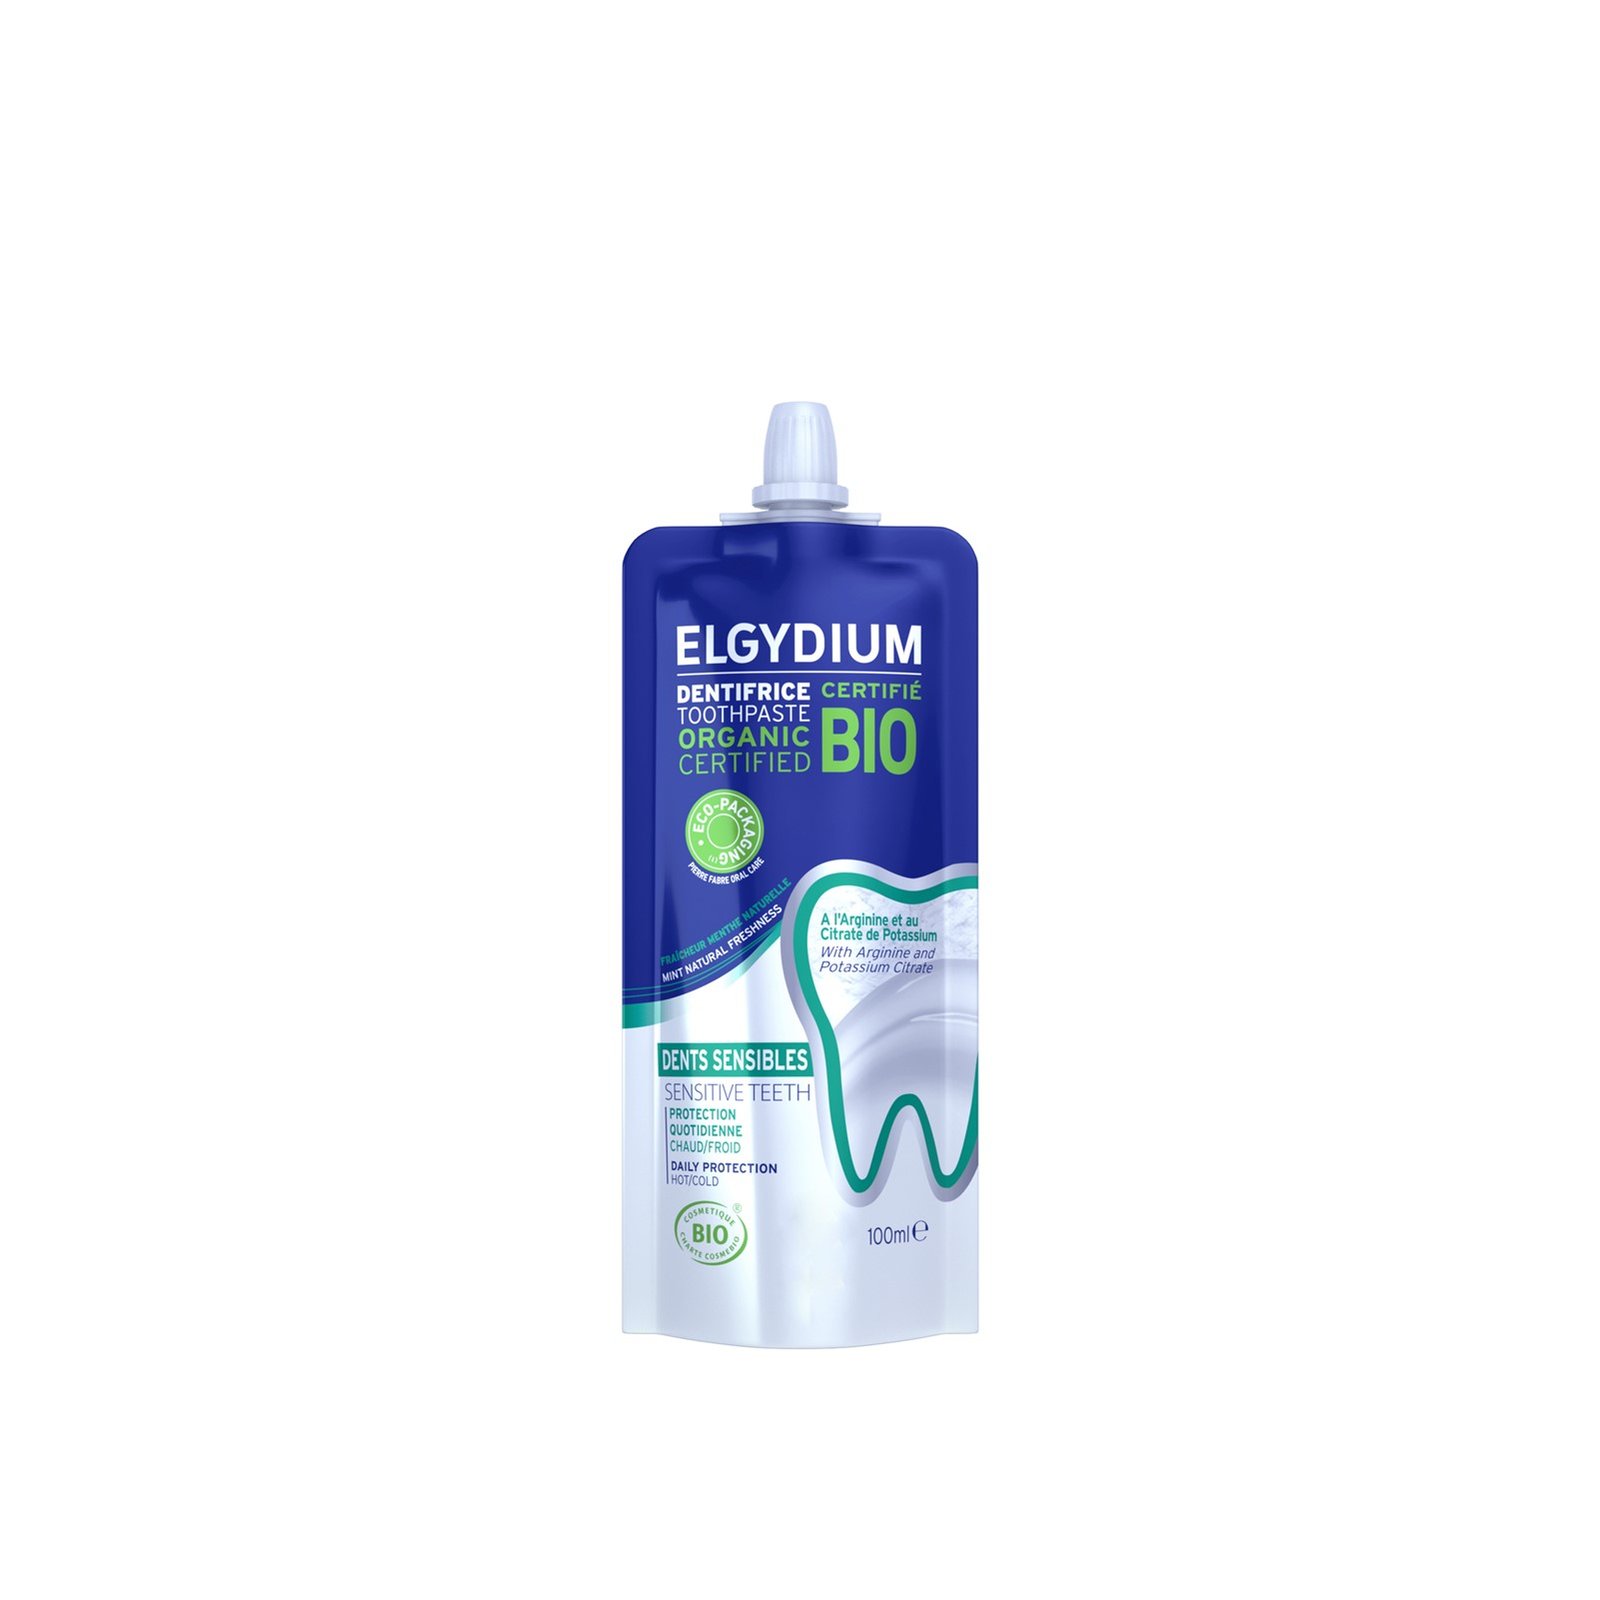 Elgydium Bio Sensitive Teeth Toothpaste 100ml (3.38 fl oz)